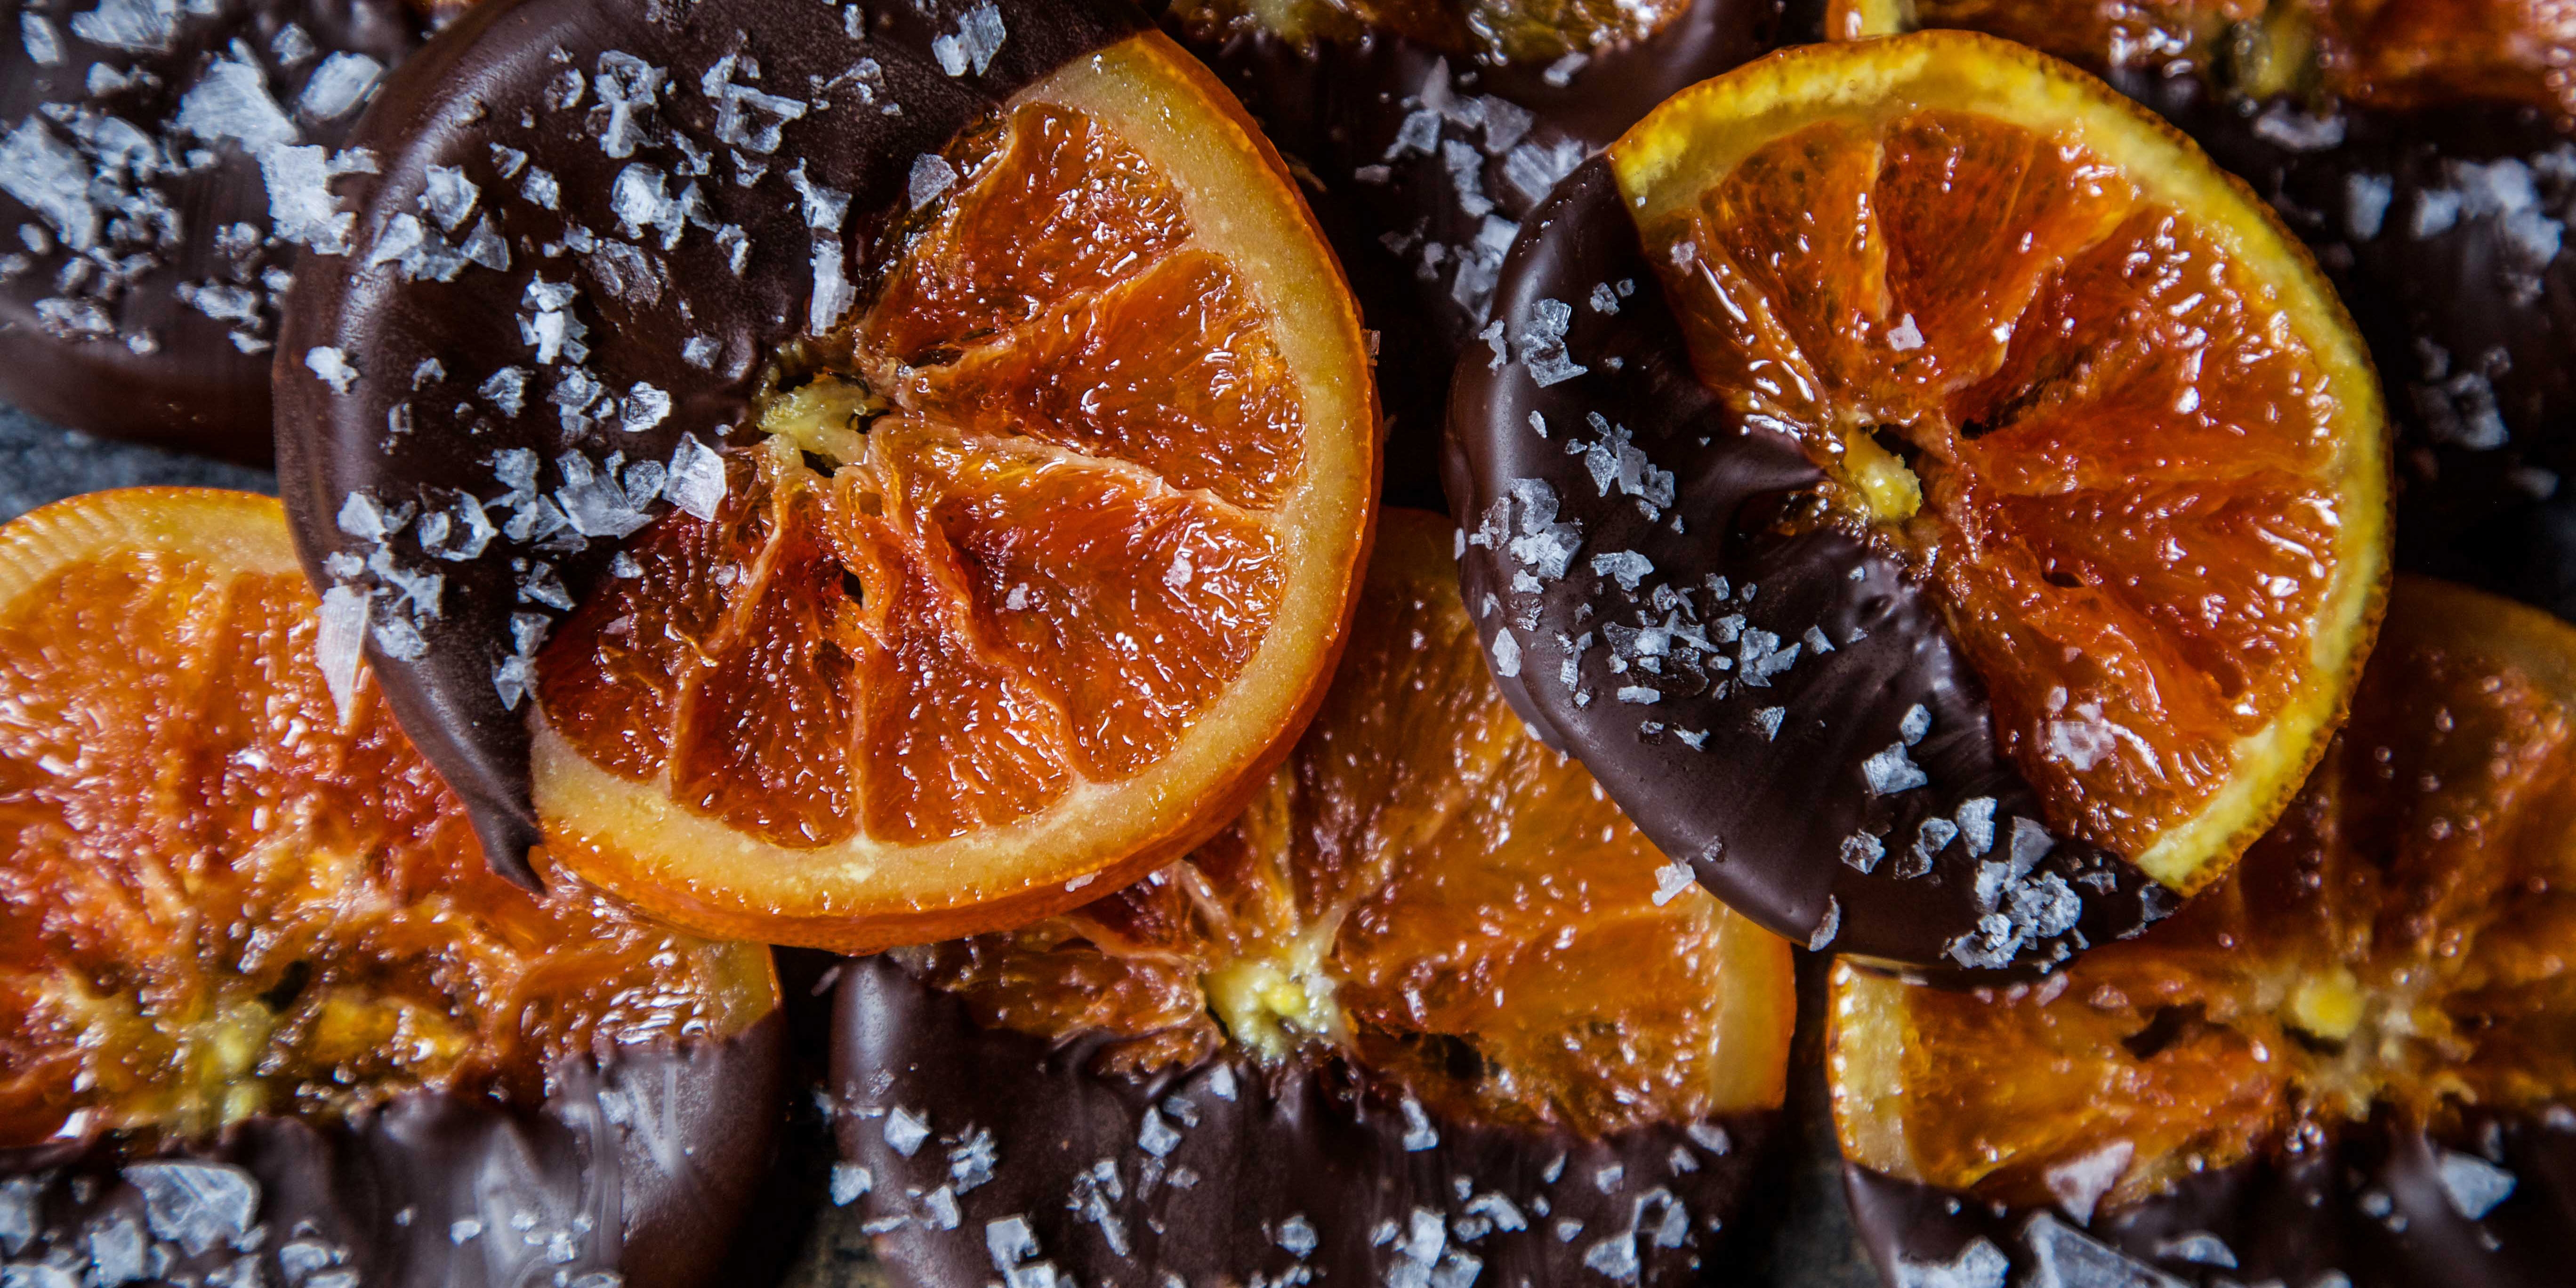 Candied Orange Slices with Dark Chocolate